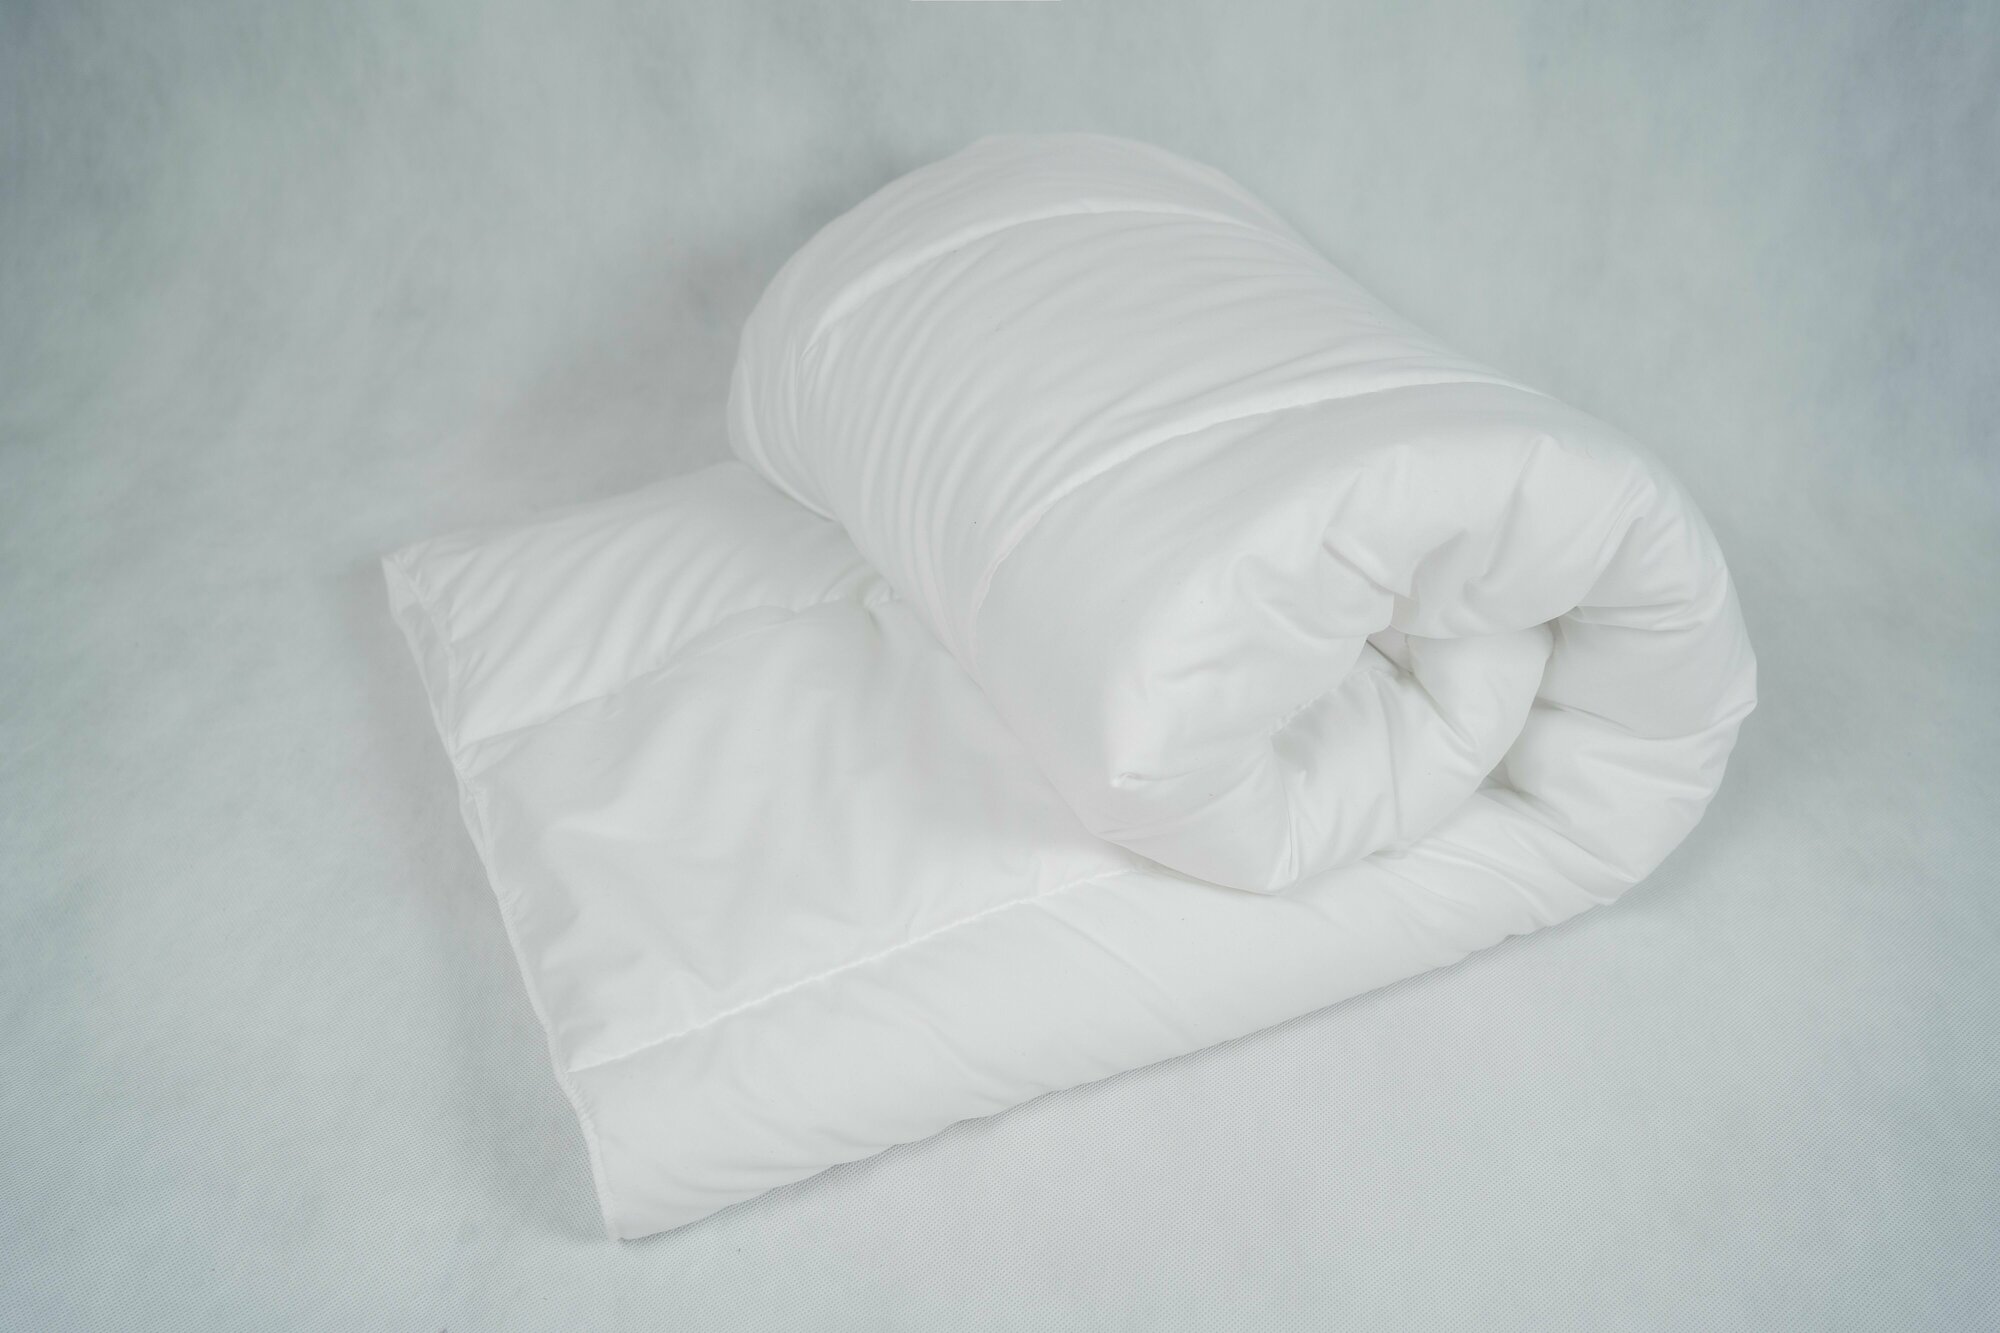 Одеяло легкое safferot белое 140х200 см